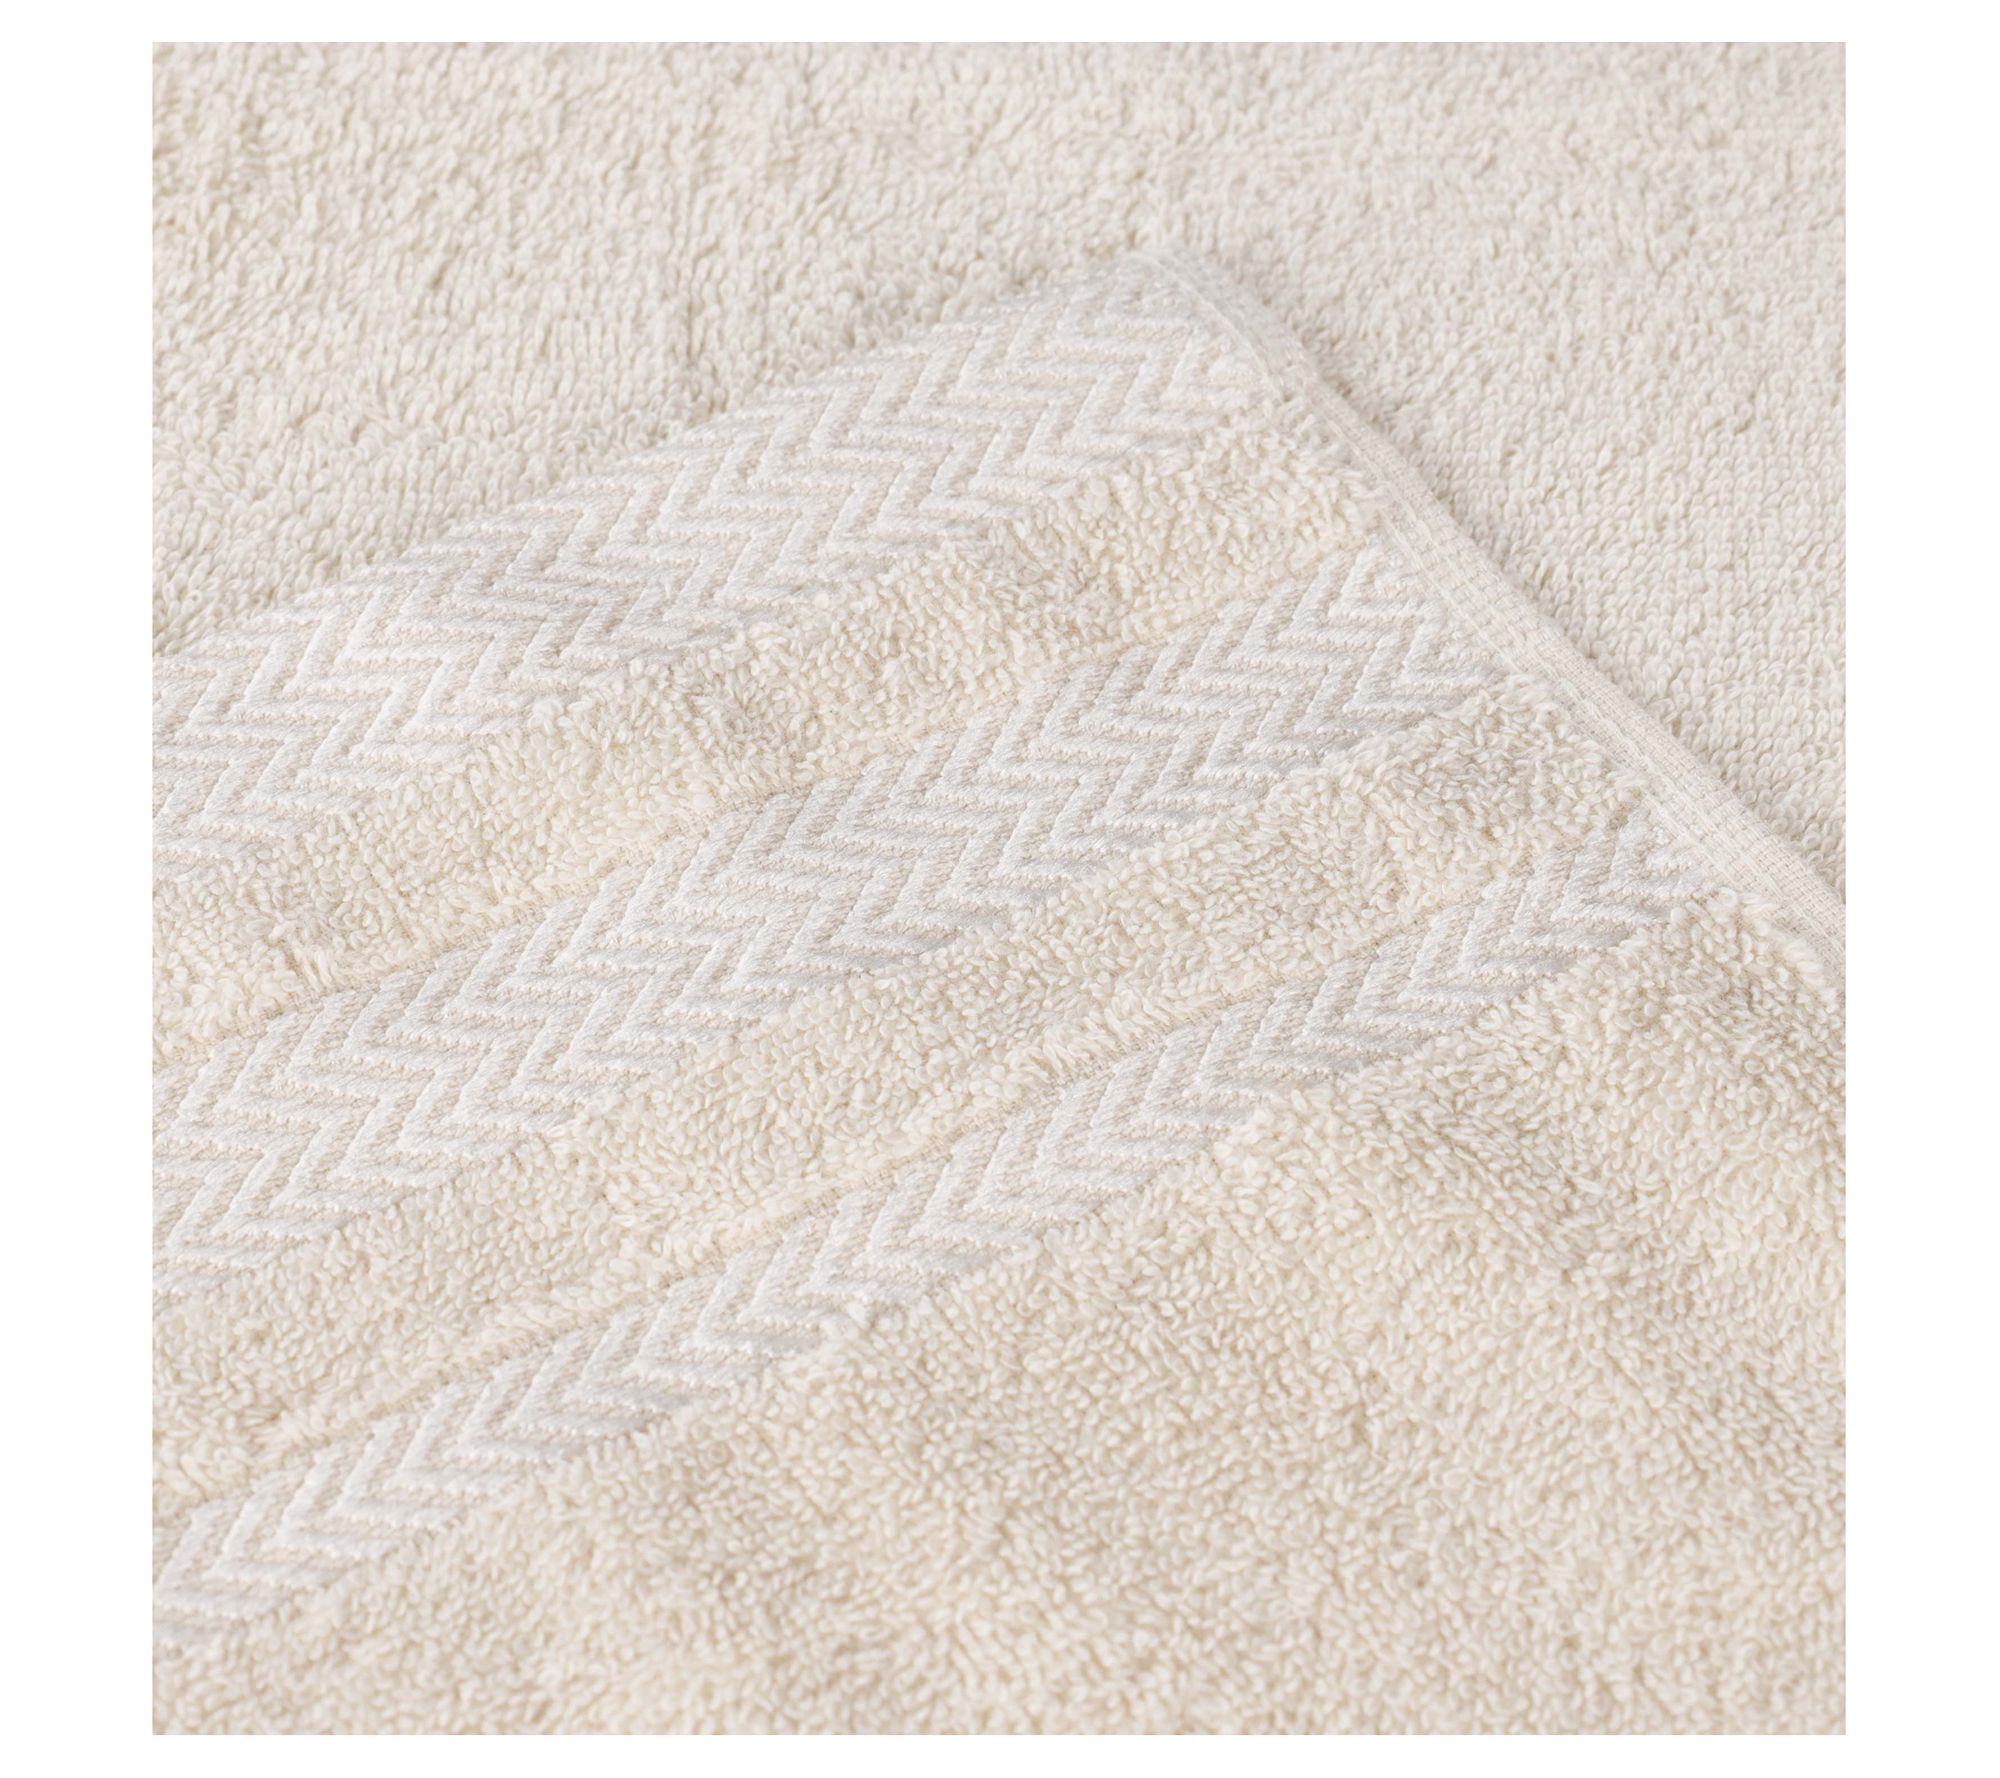 Superior 6pc Zero Twist Cotton Dobby Border Soft Towel Set ,Cranberry